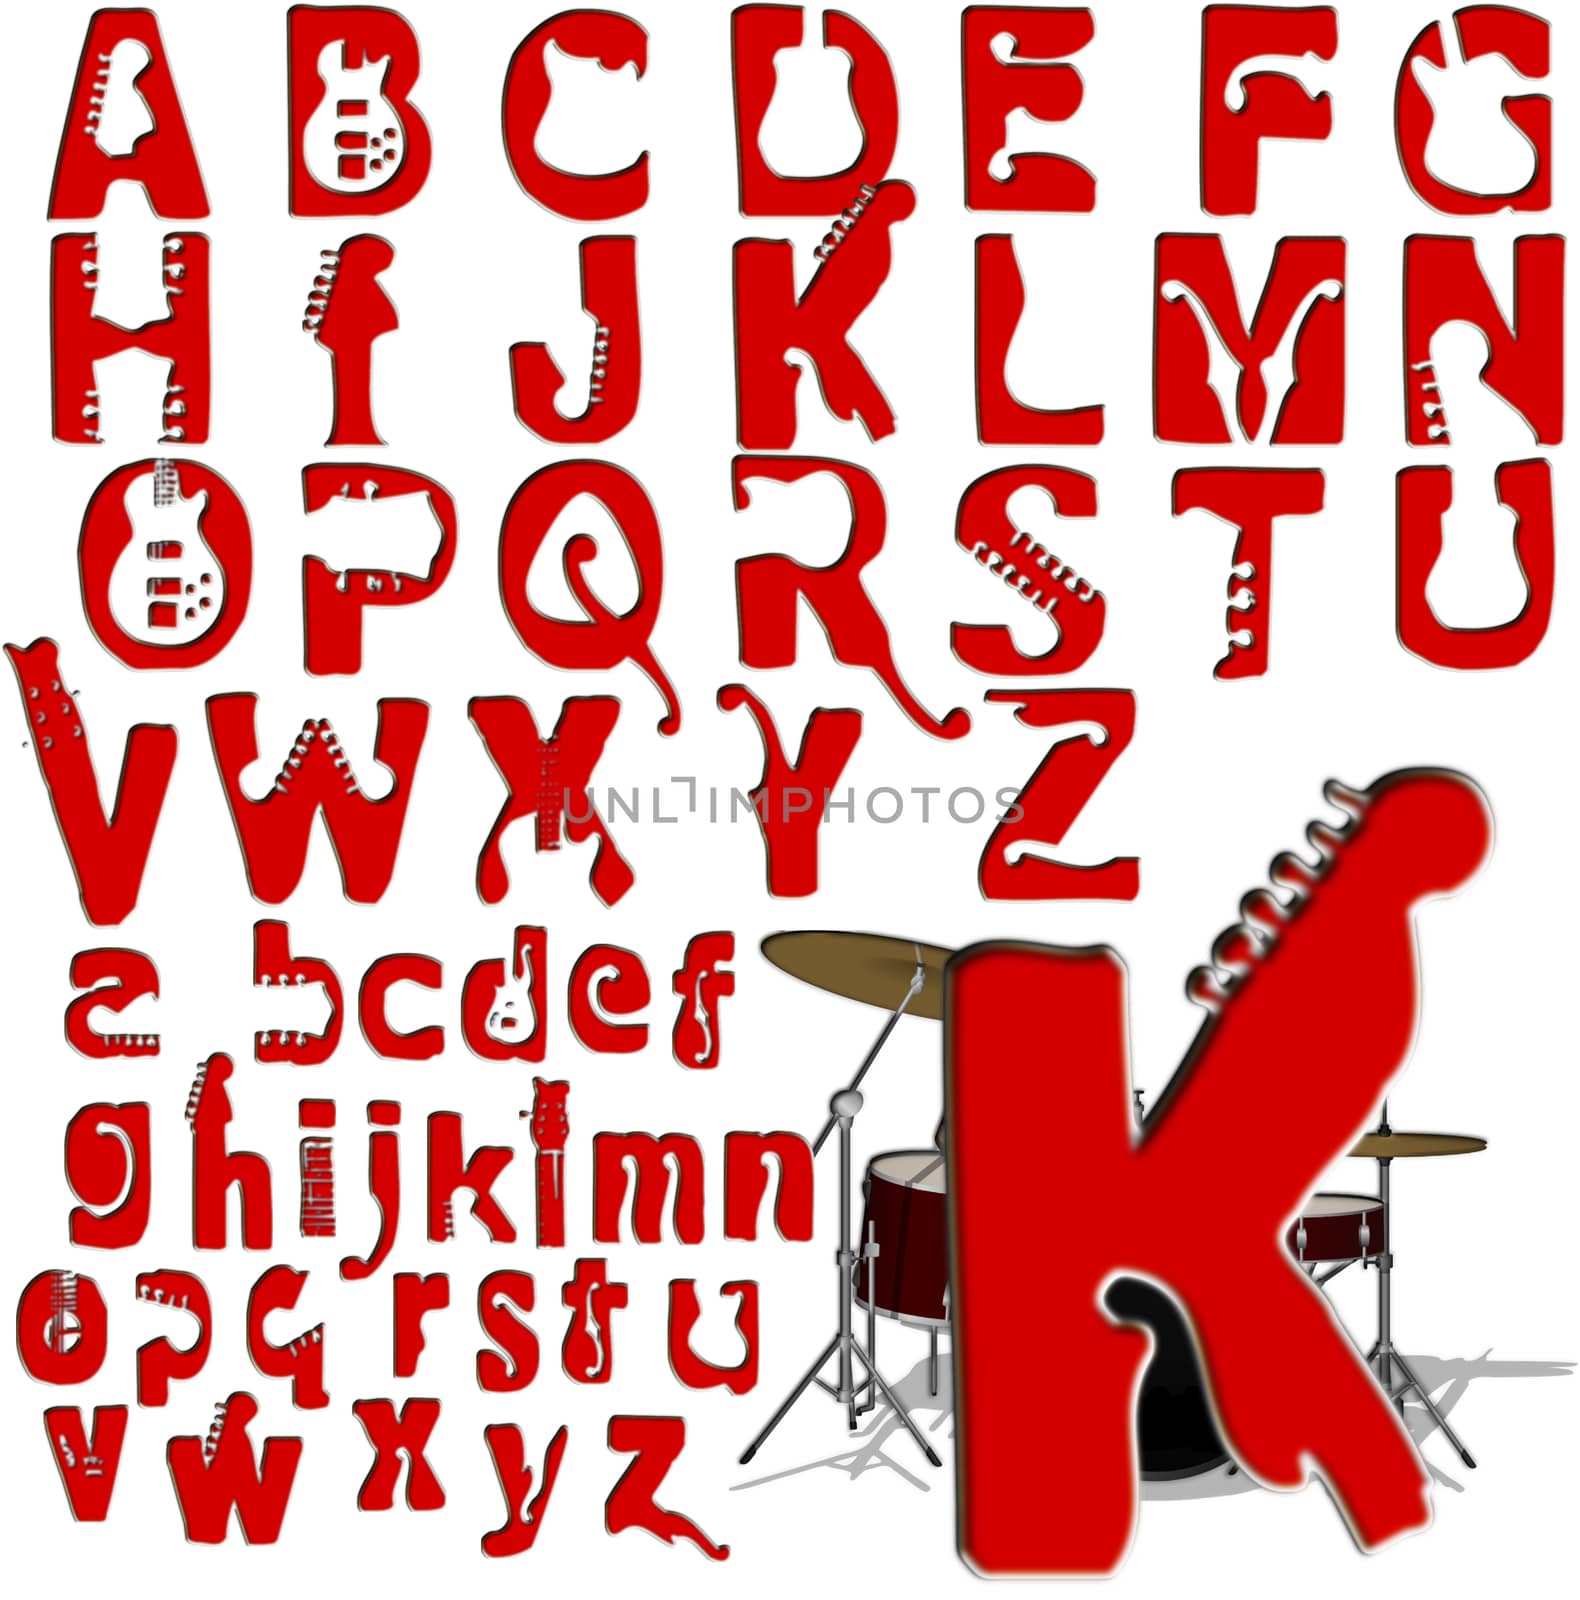 Alphabet lettering design